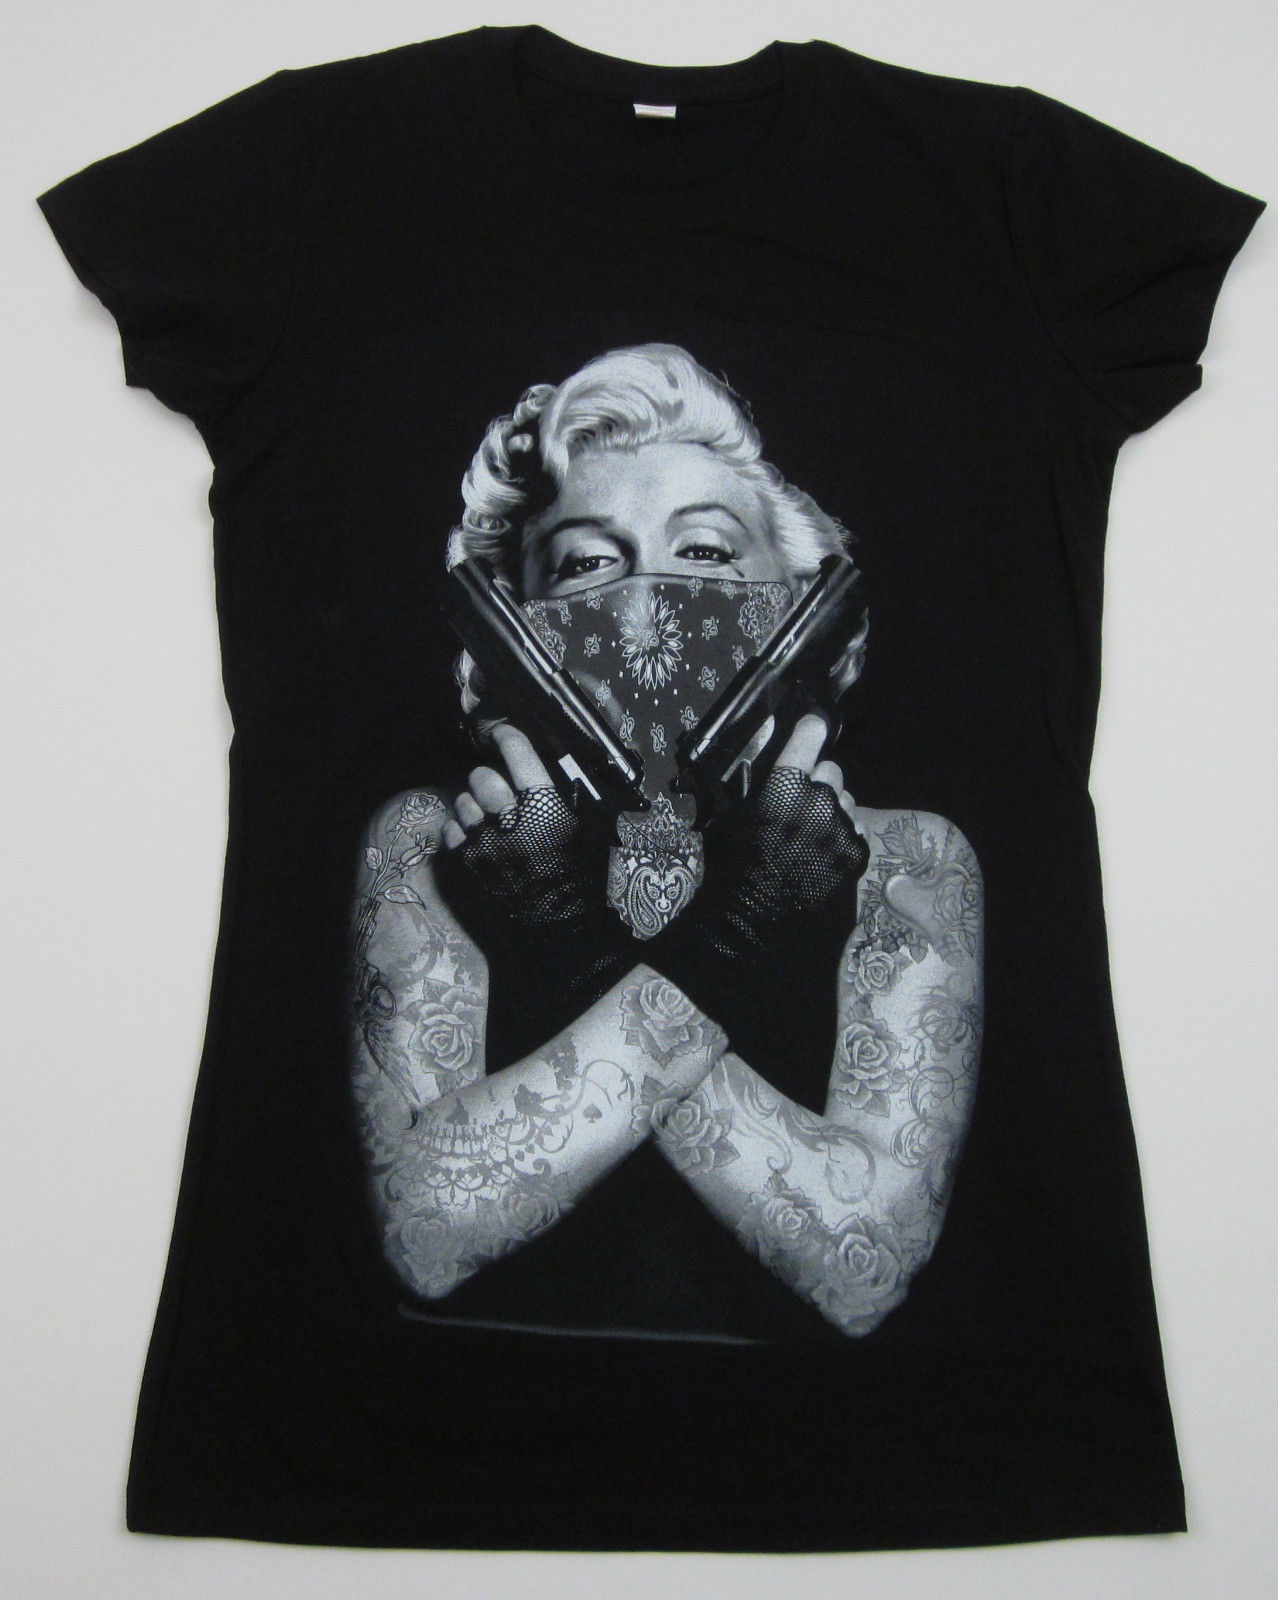 Abel Marilyn Monroe Art T Shirt Tattoo Bandit Tee Guns